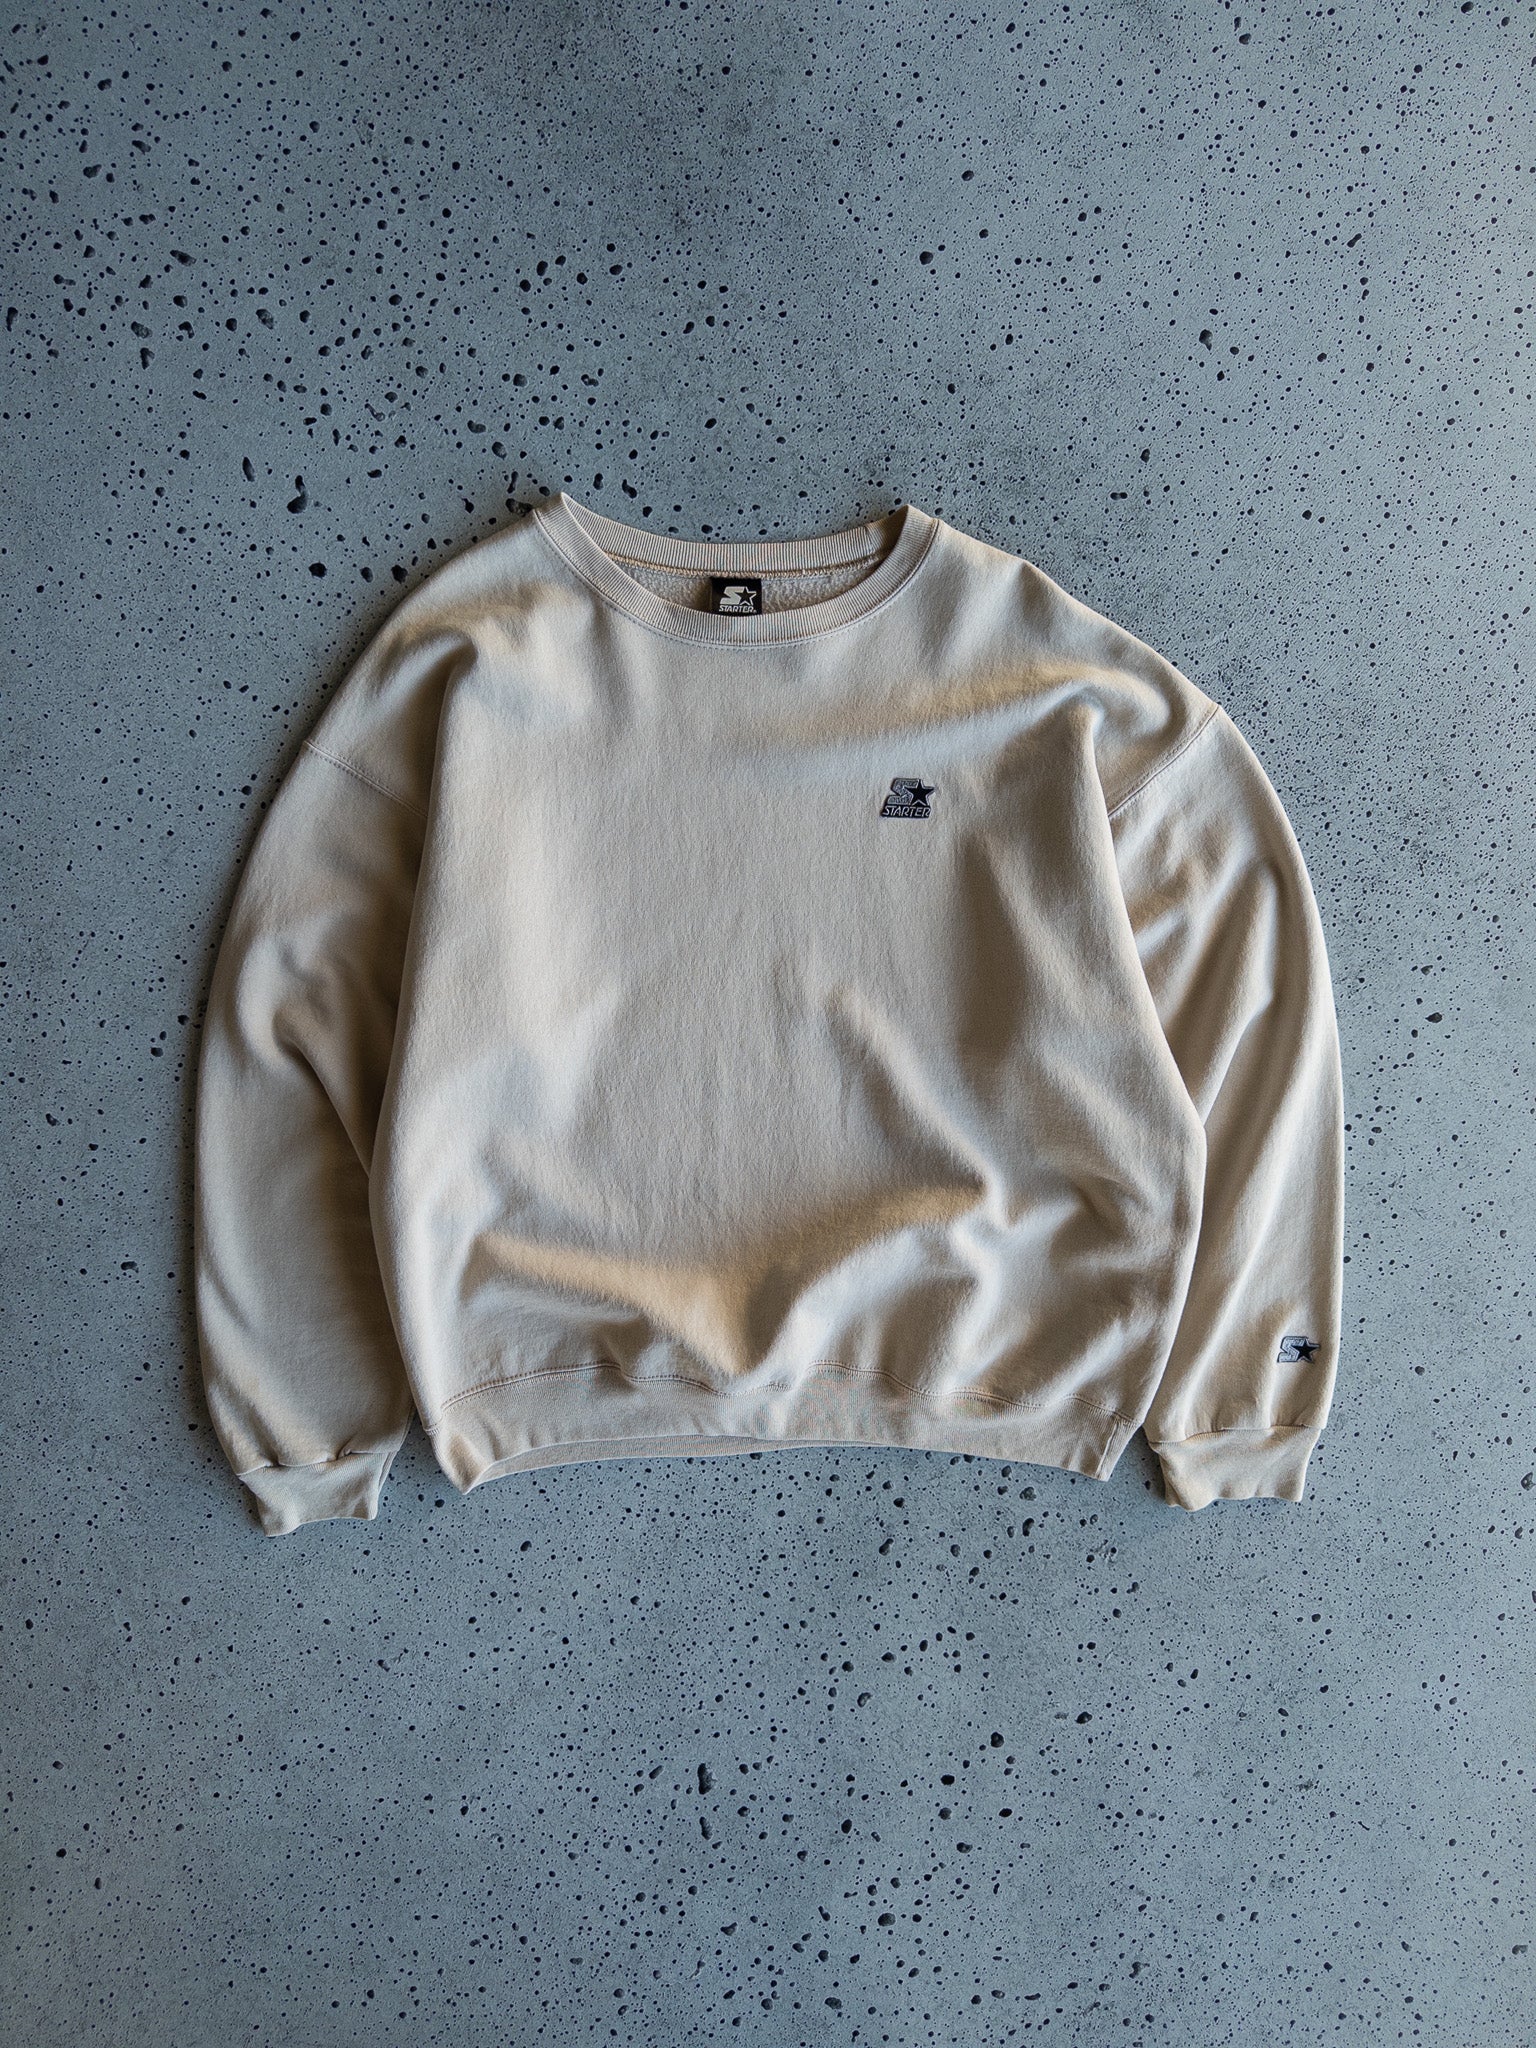 Vintage Starter Sweatshirt (L)